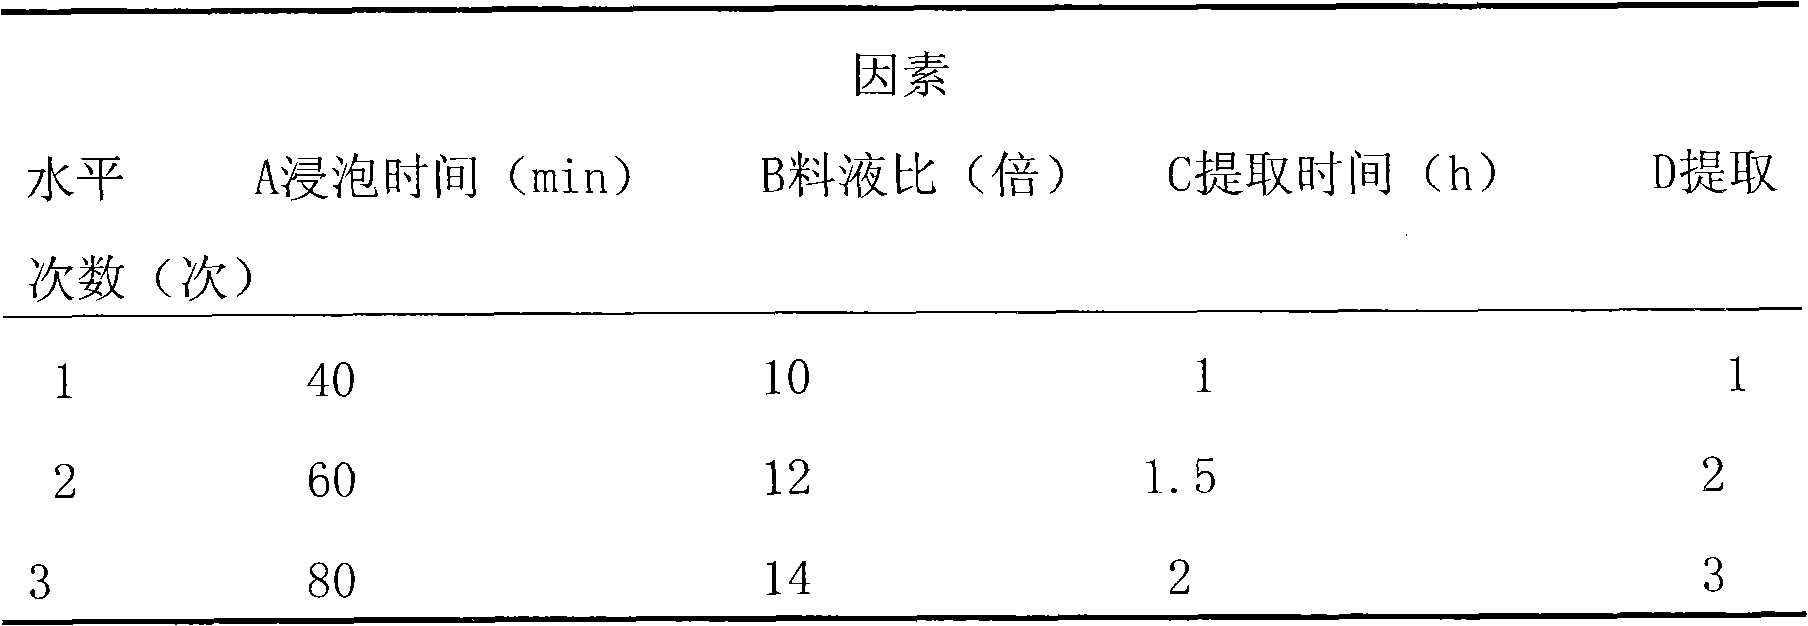 Method for producing total flavonoids of chrysanthemum